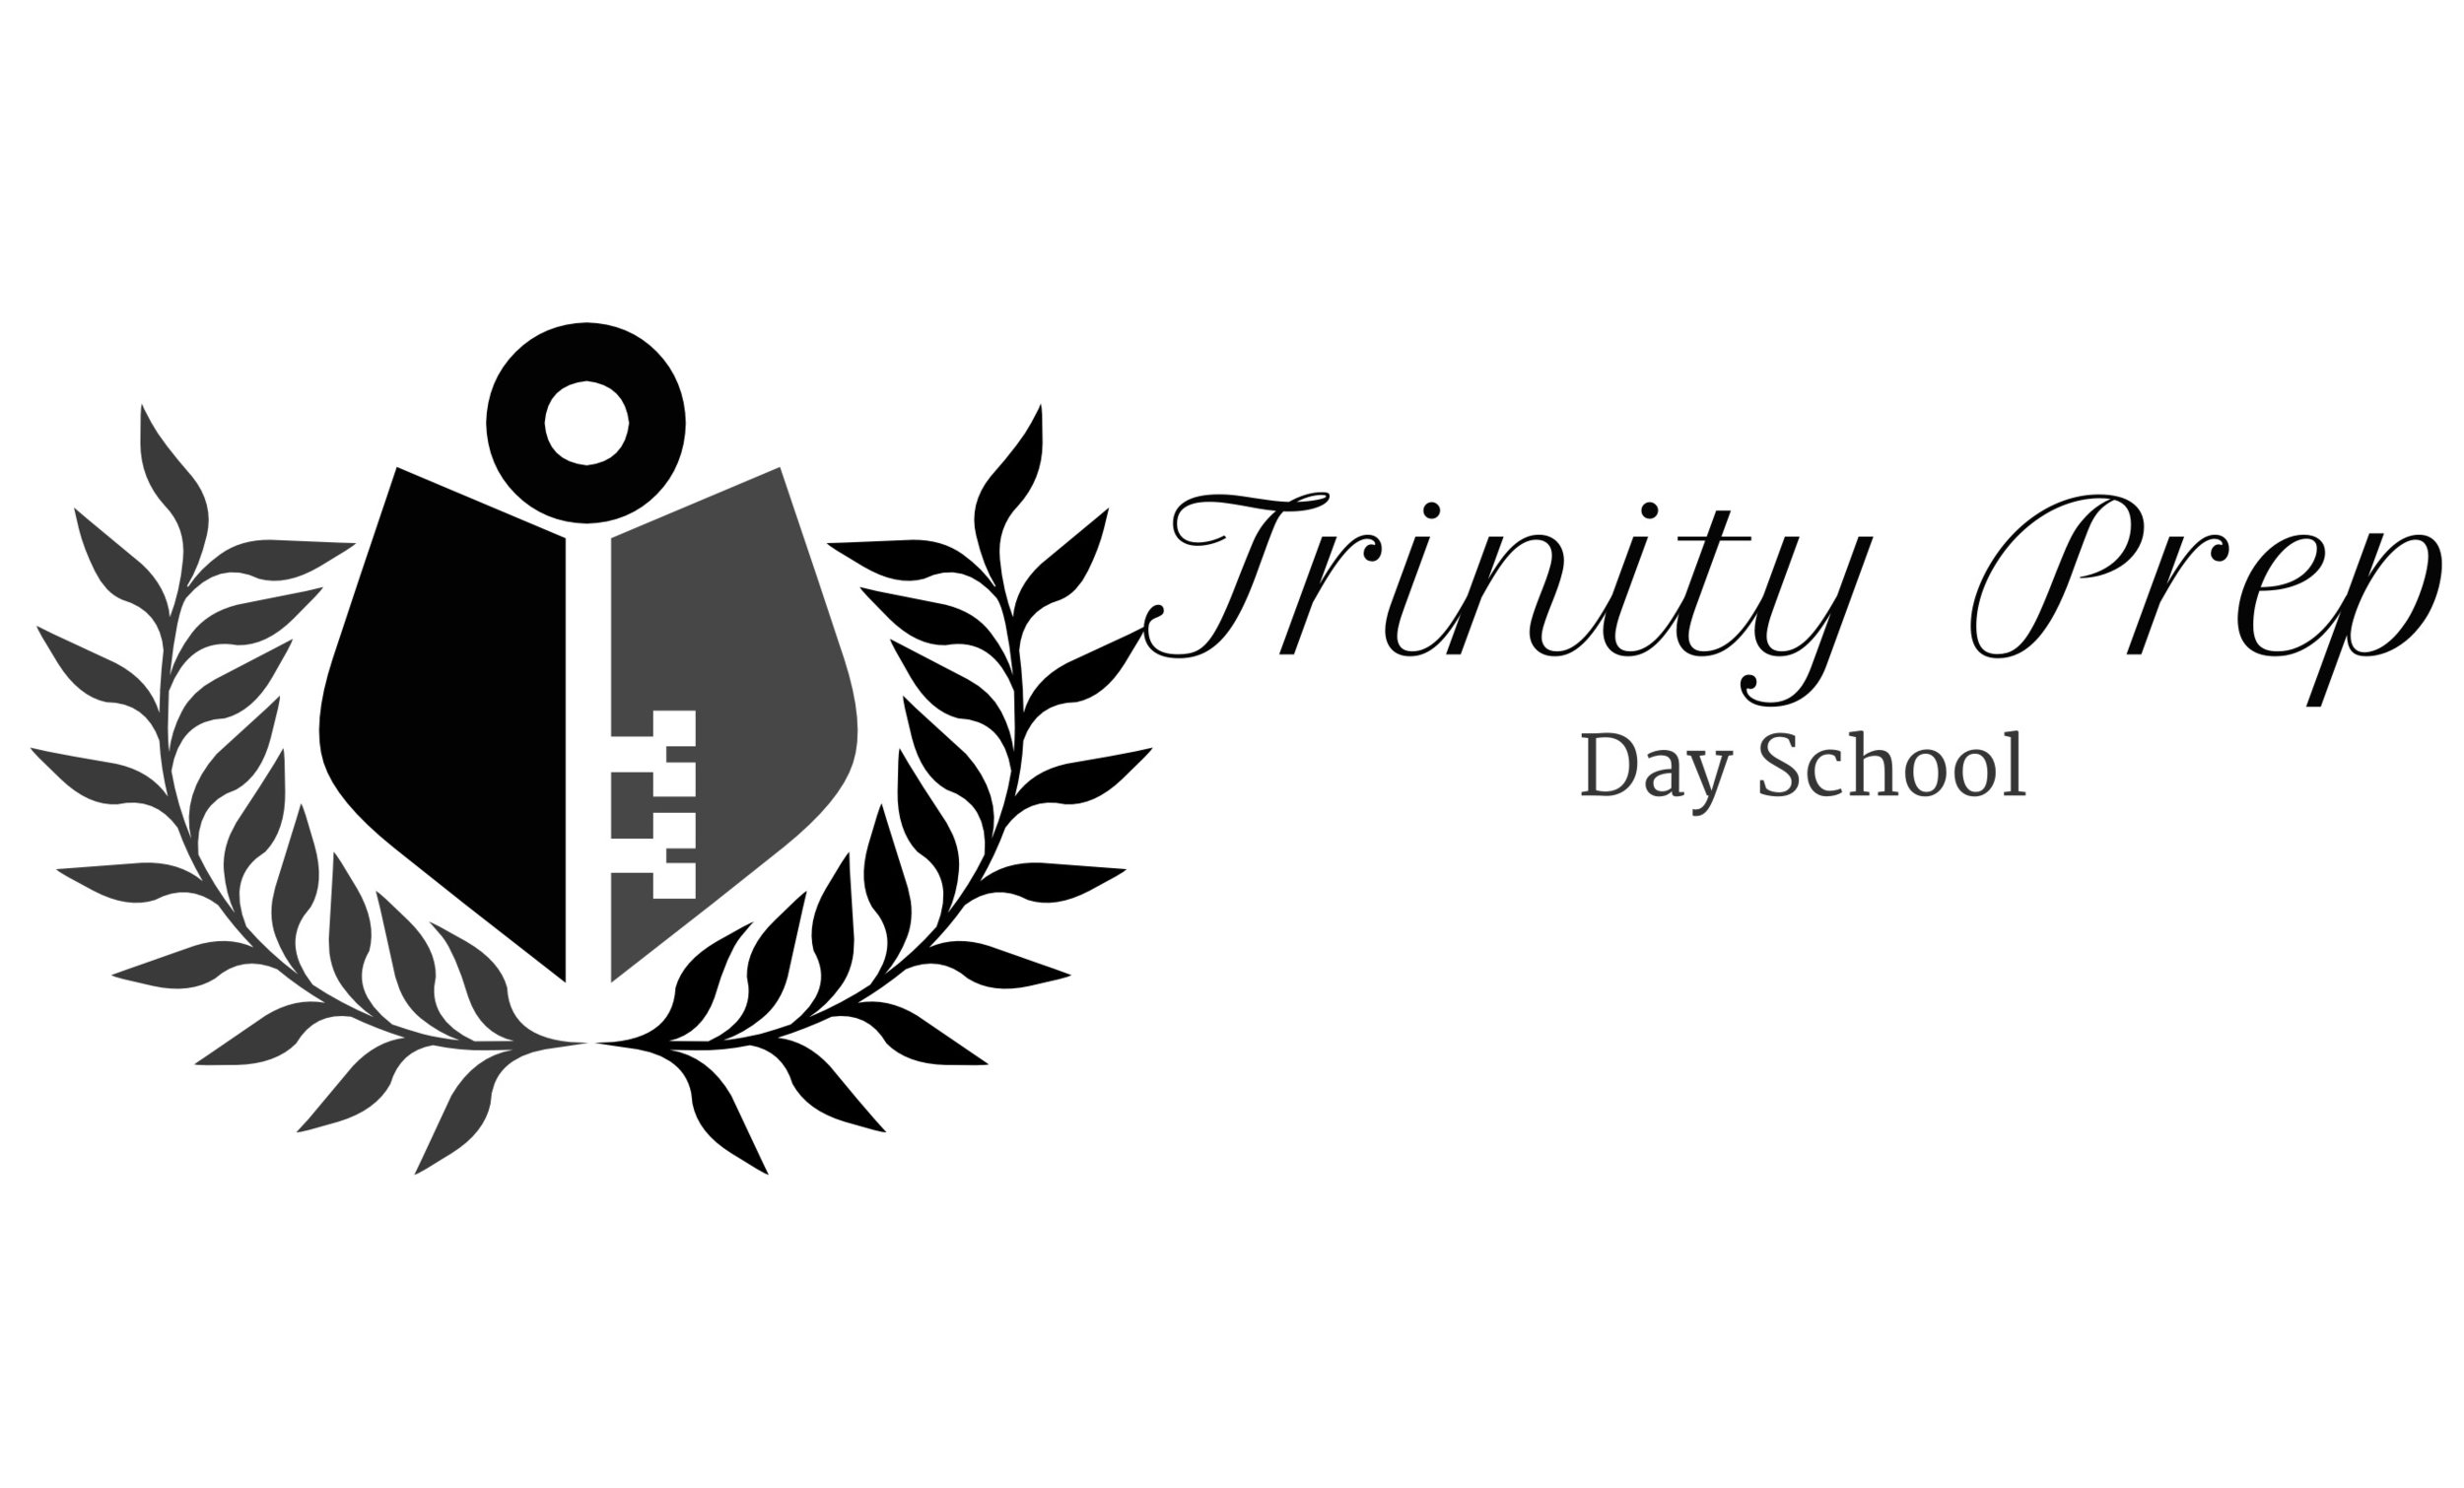 Trinity Prep Day School